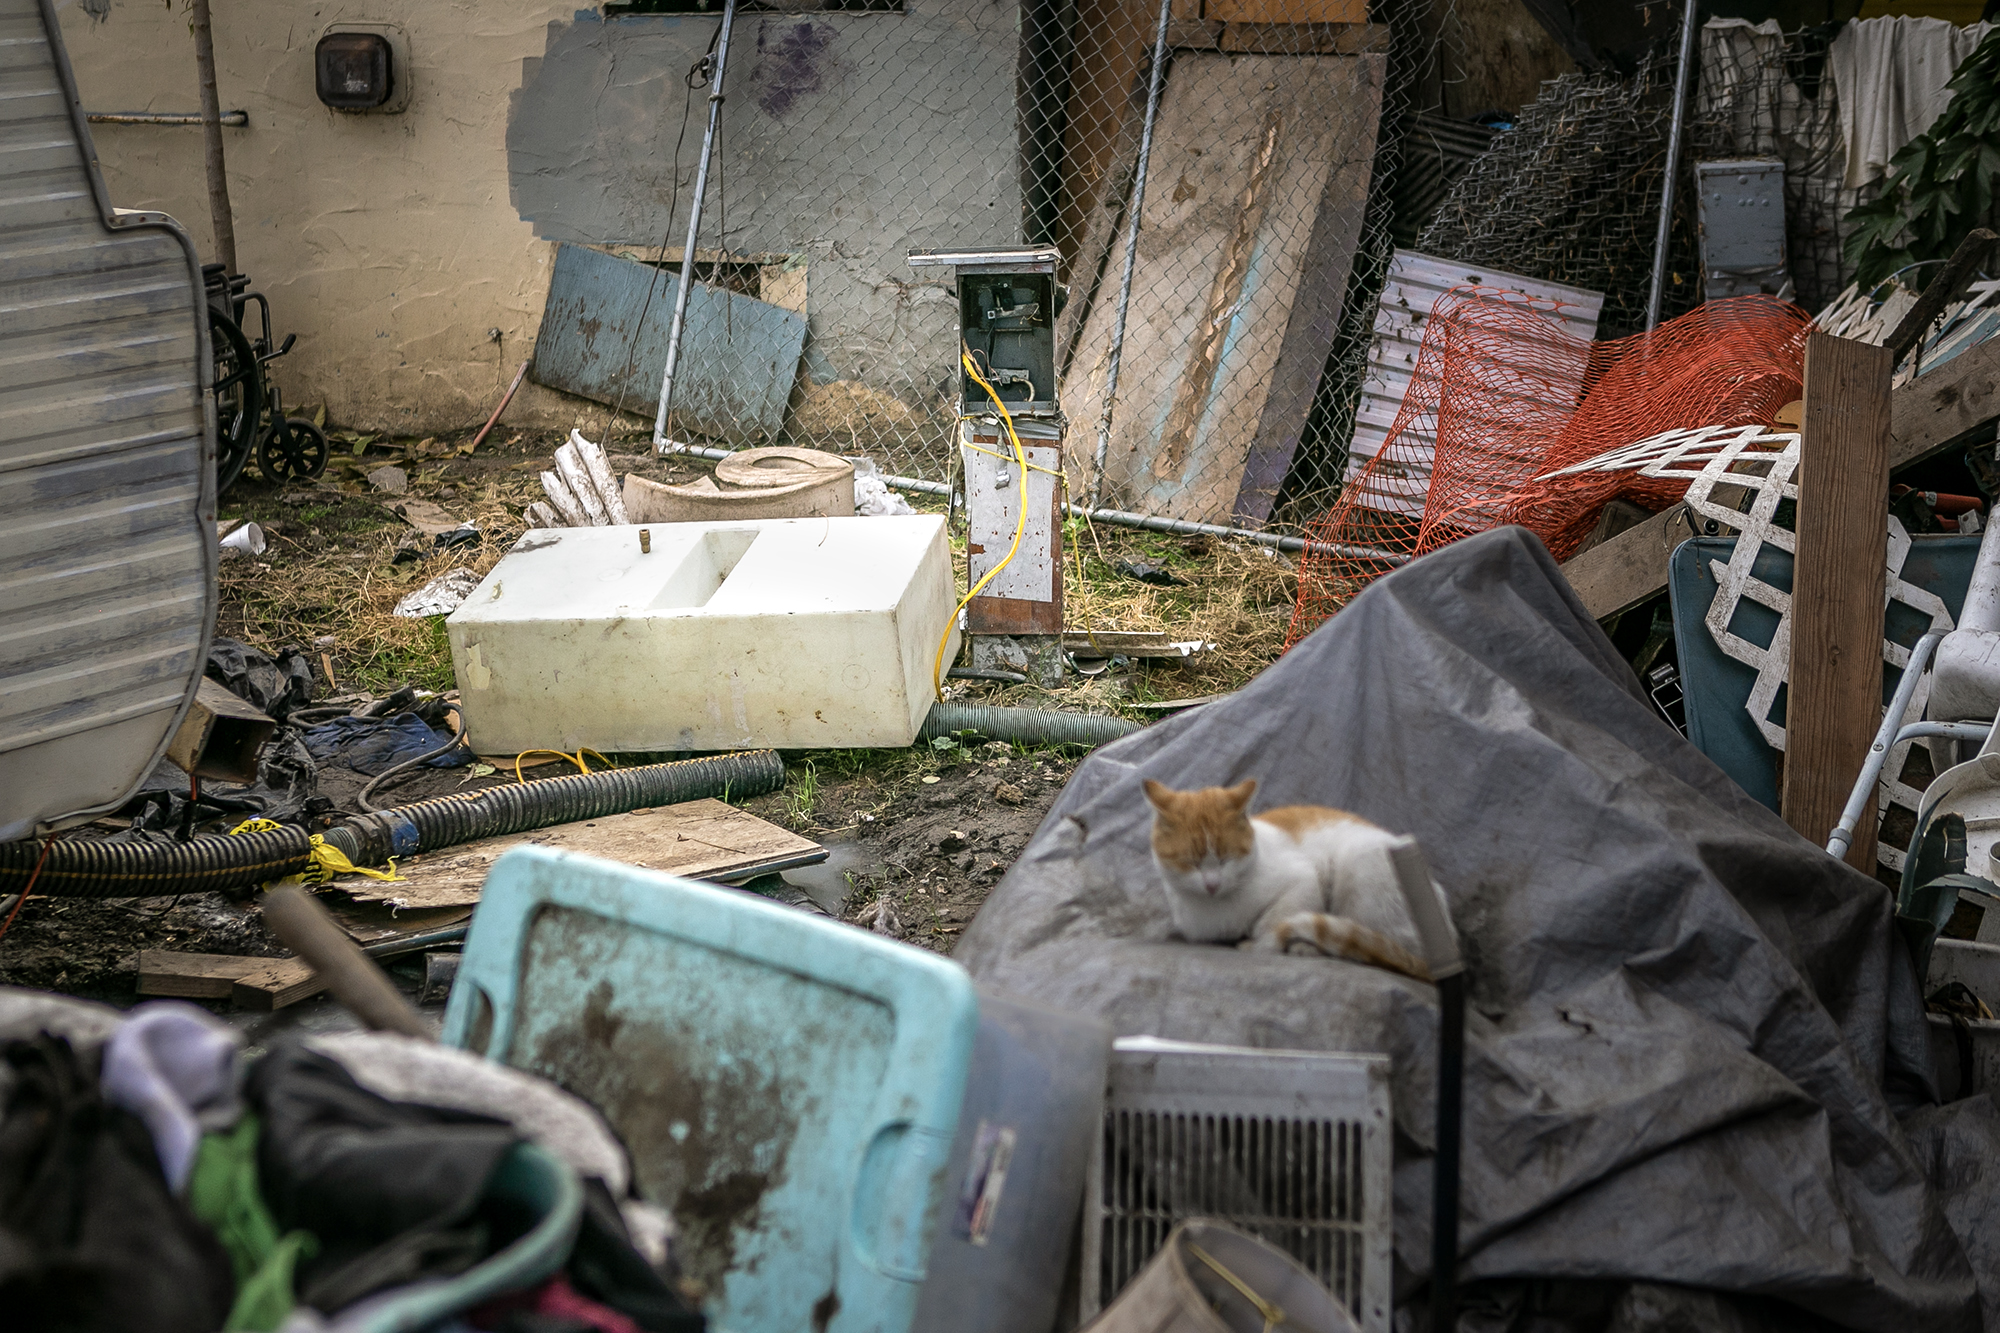 Trash and debris at Stockton Park village on Nov. 22, 2022. Photo by Rahul Lal, CalMatters